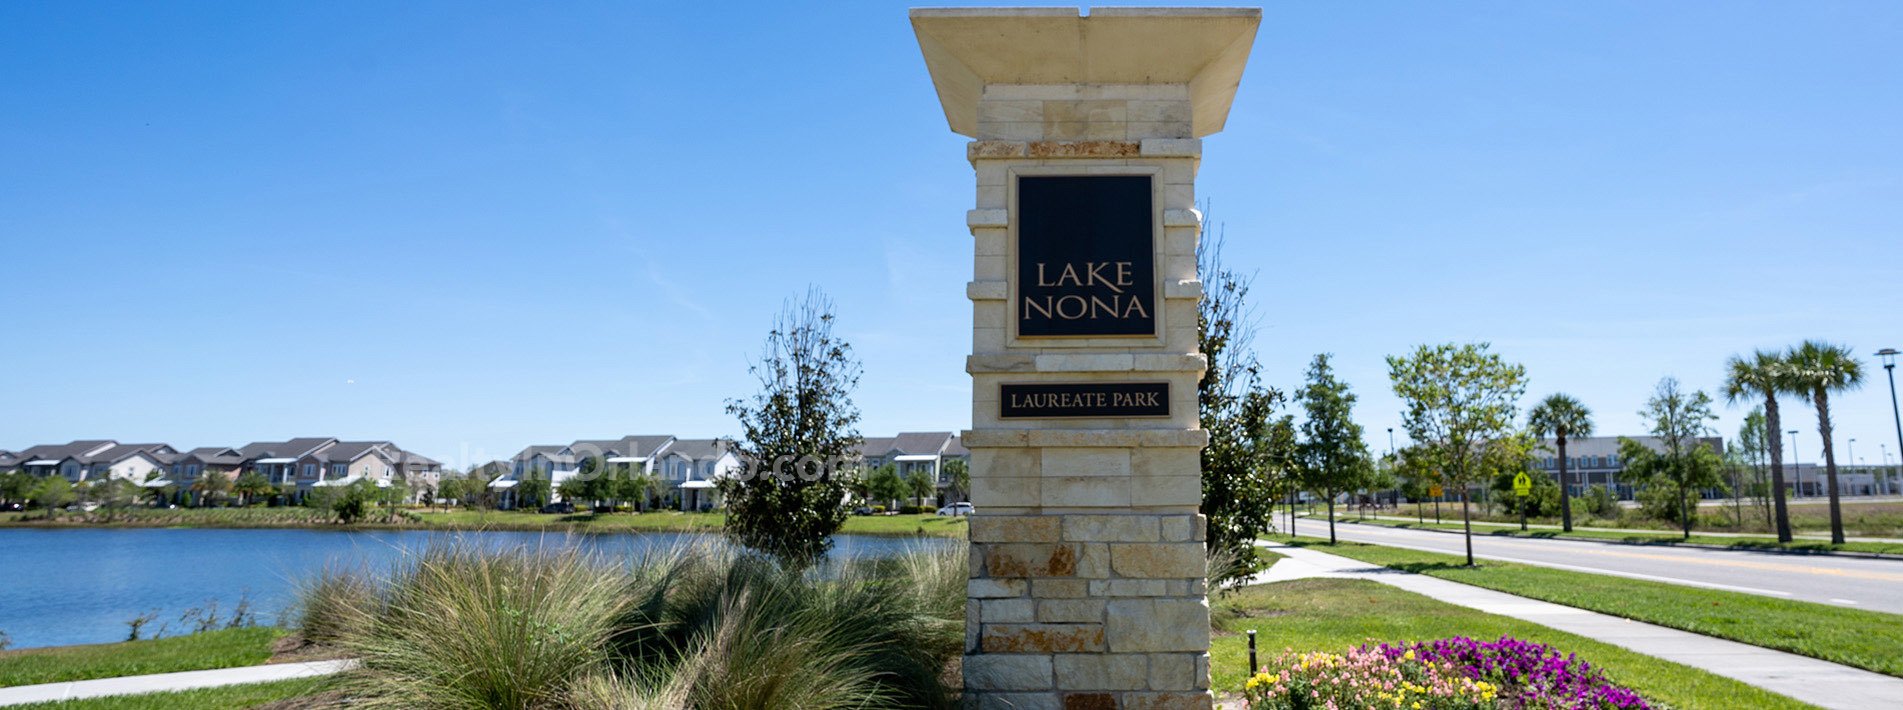 Laureate Park Lake Nona Real Estate